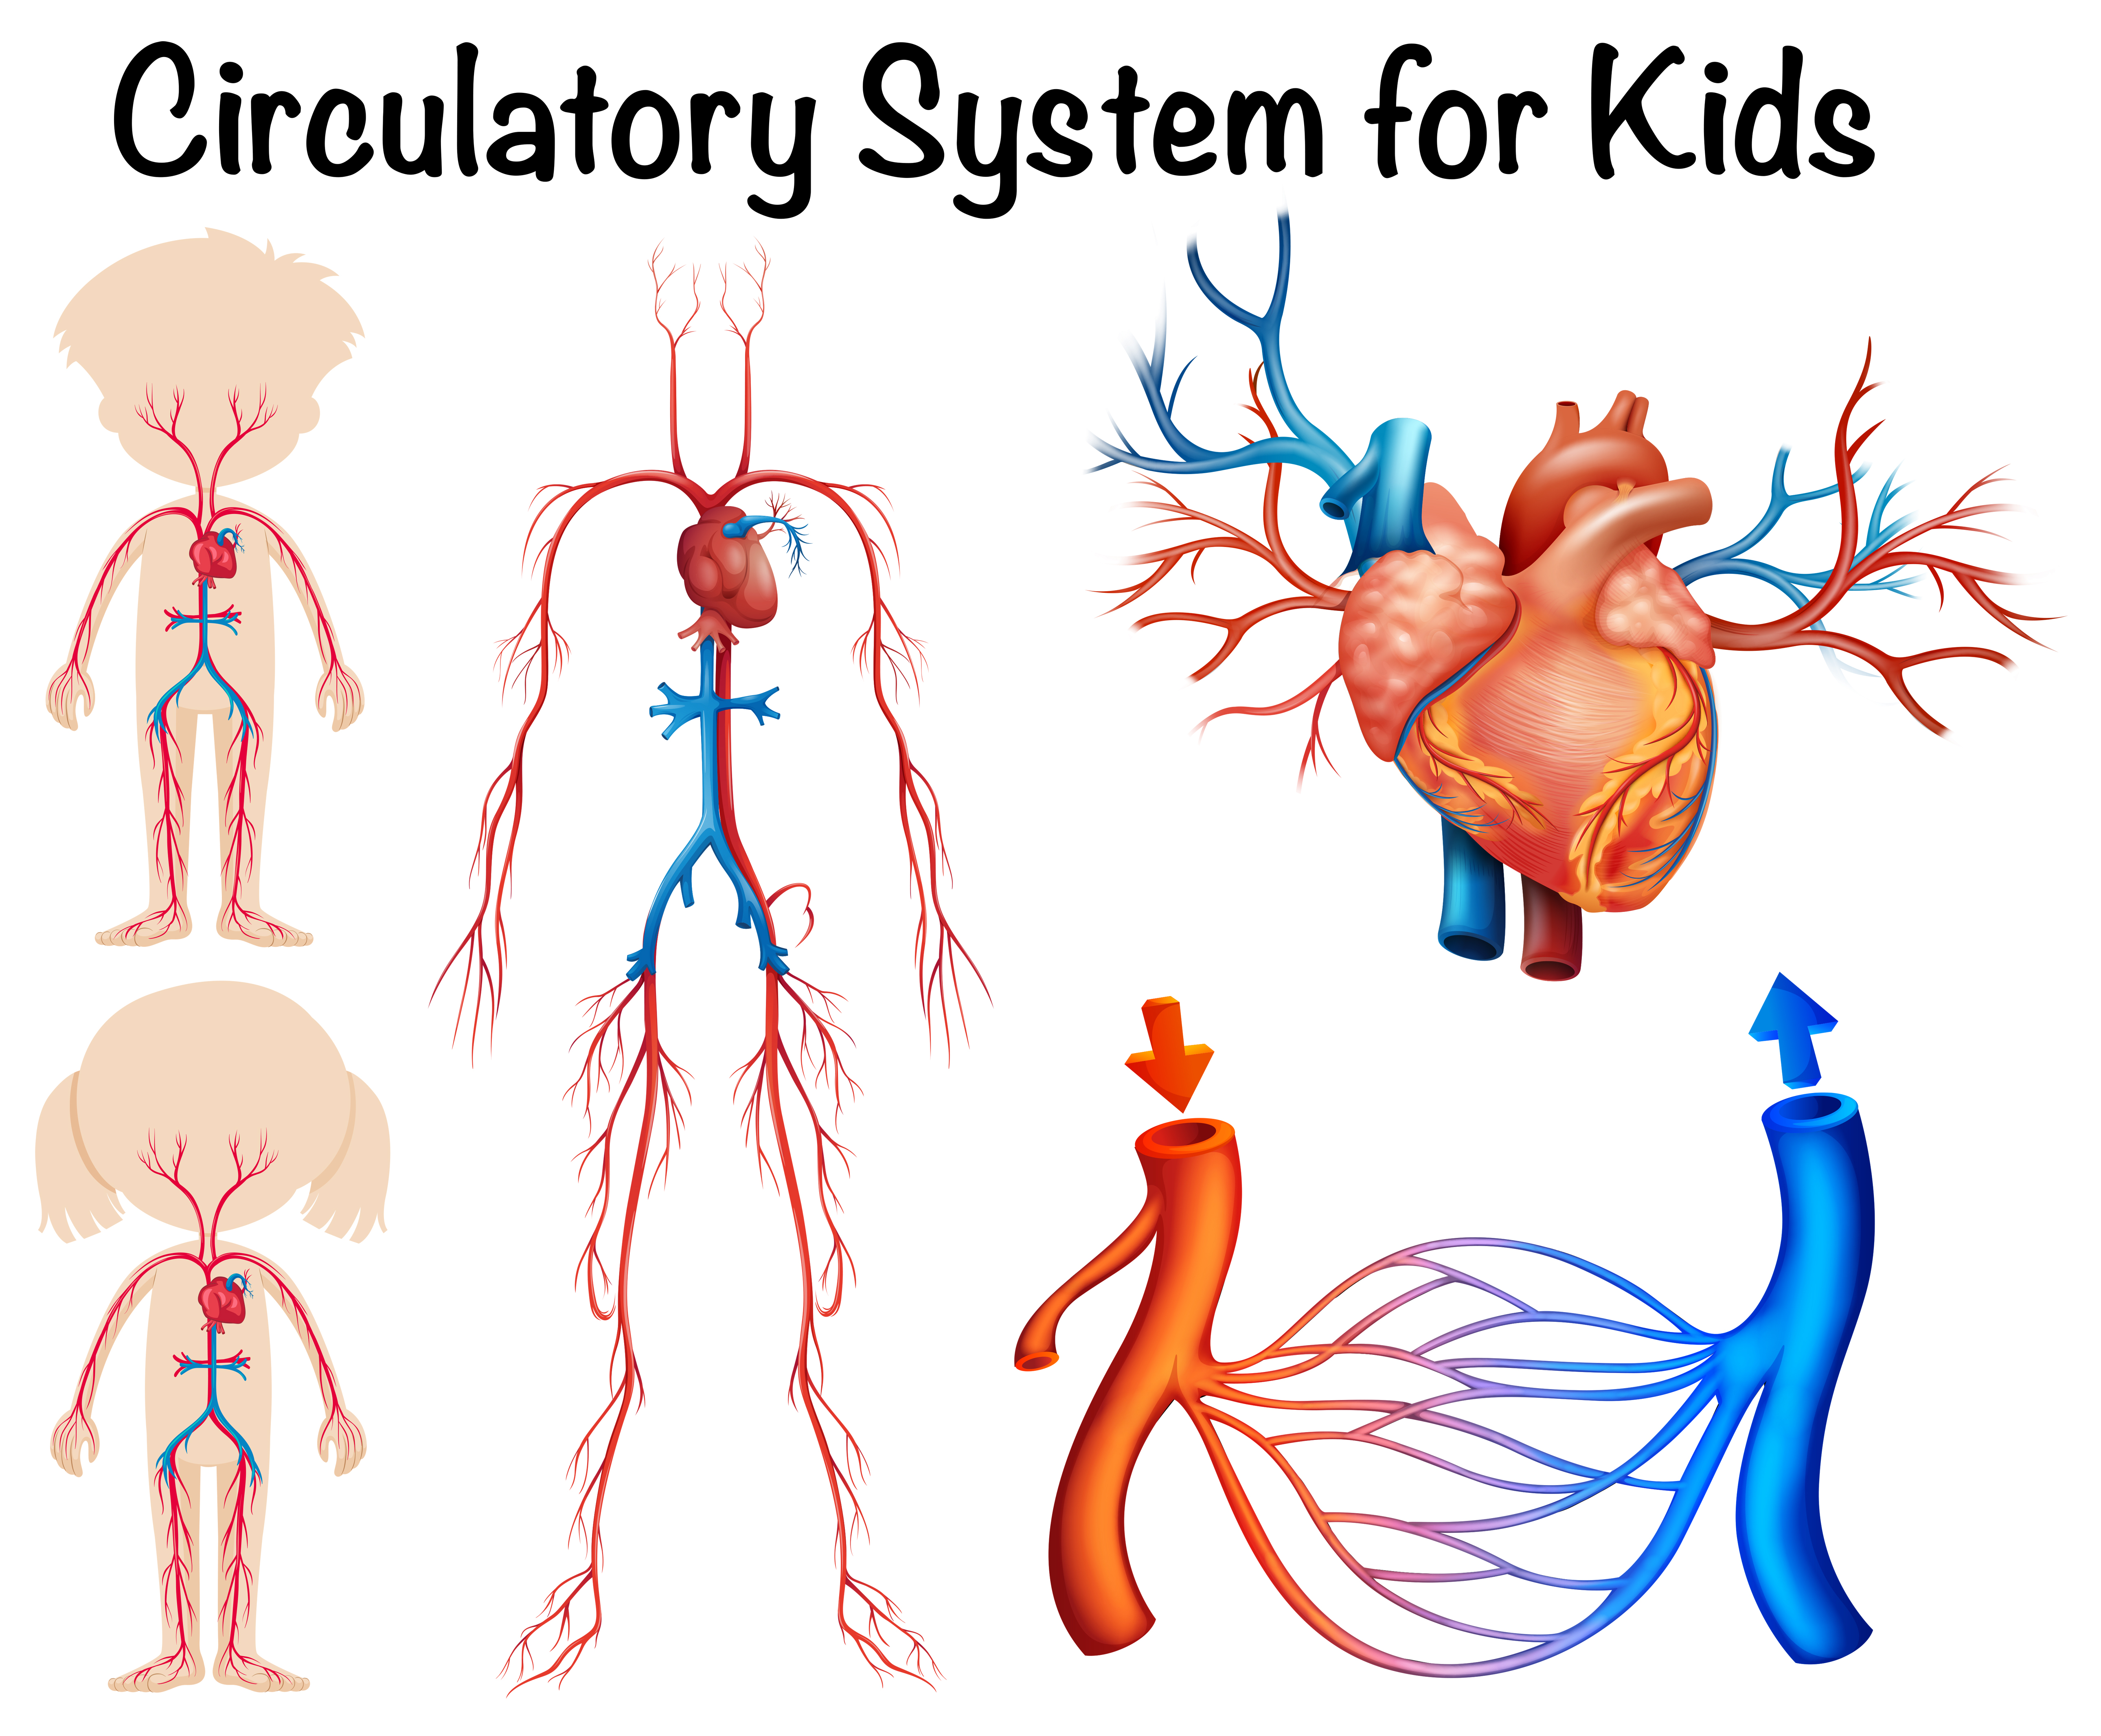 Circulatory system for kids - Download Free Vectors, Clipart Graphics & Vector Art